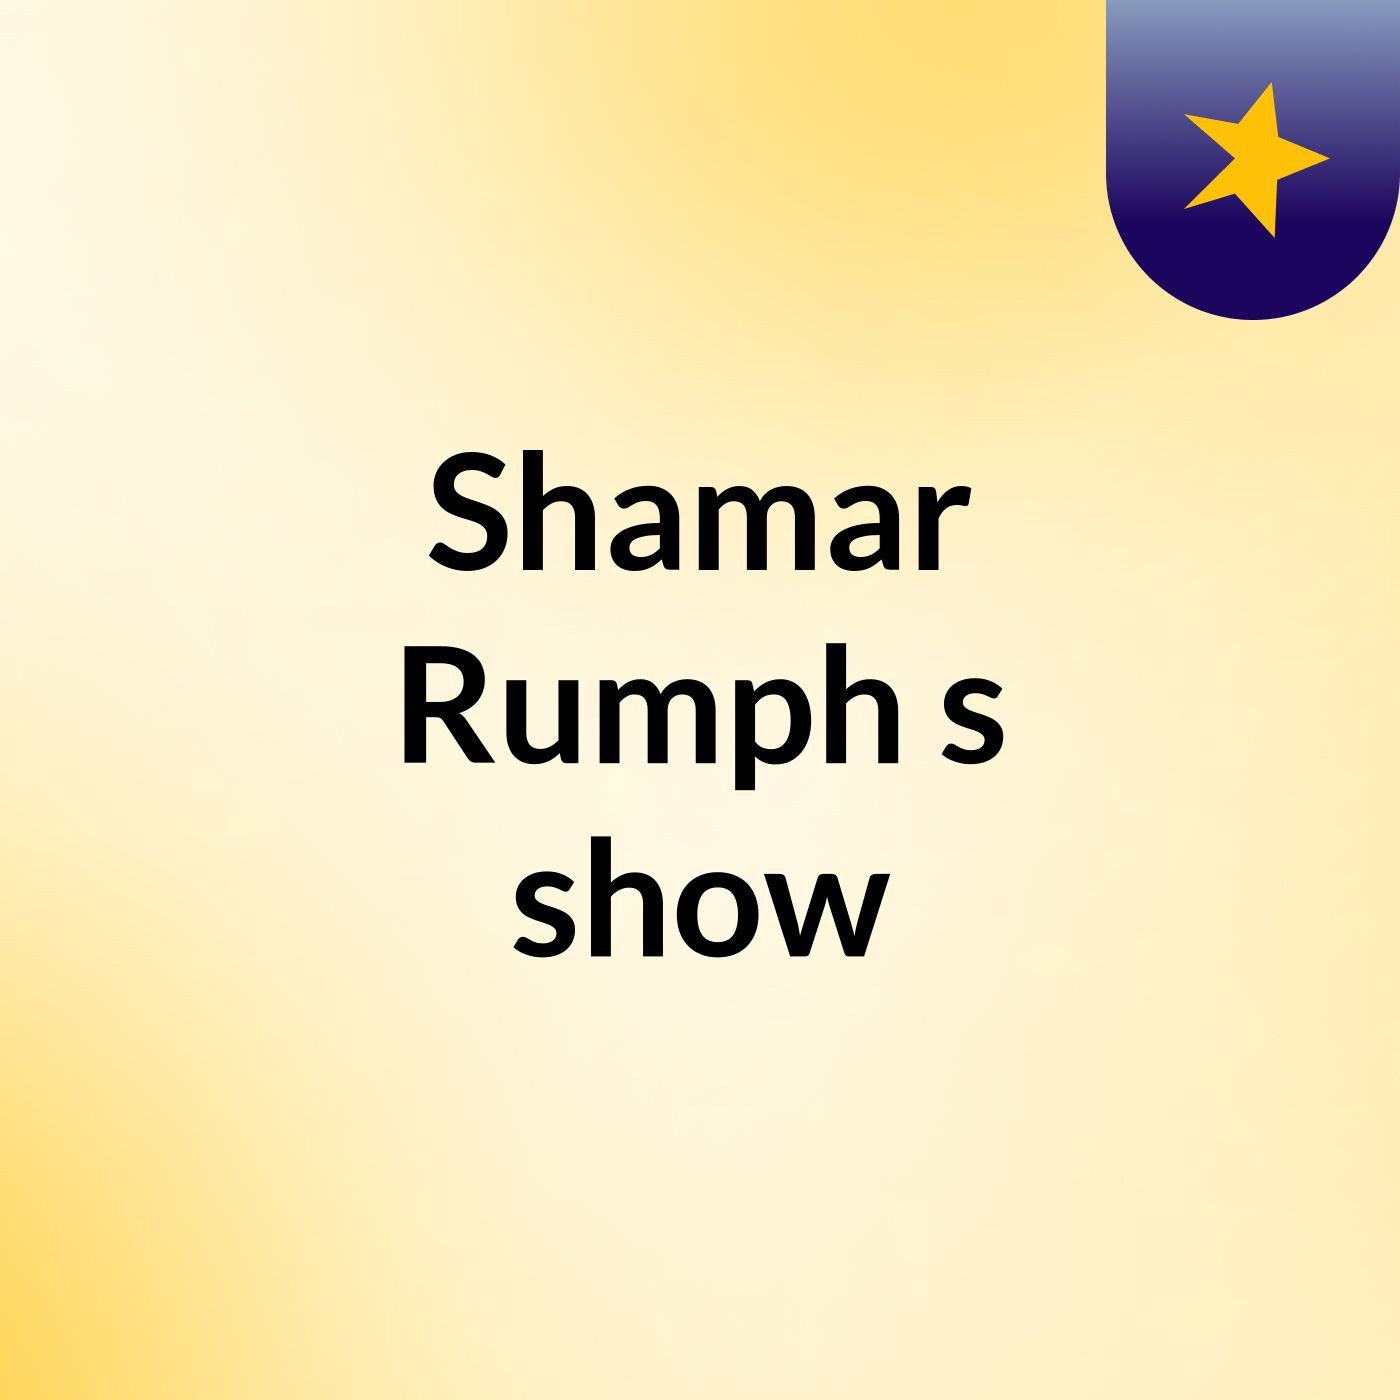 Shamar Rumph's show